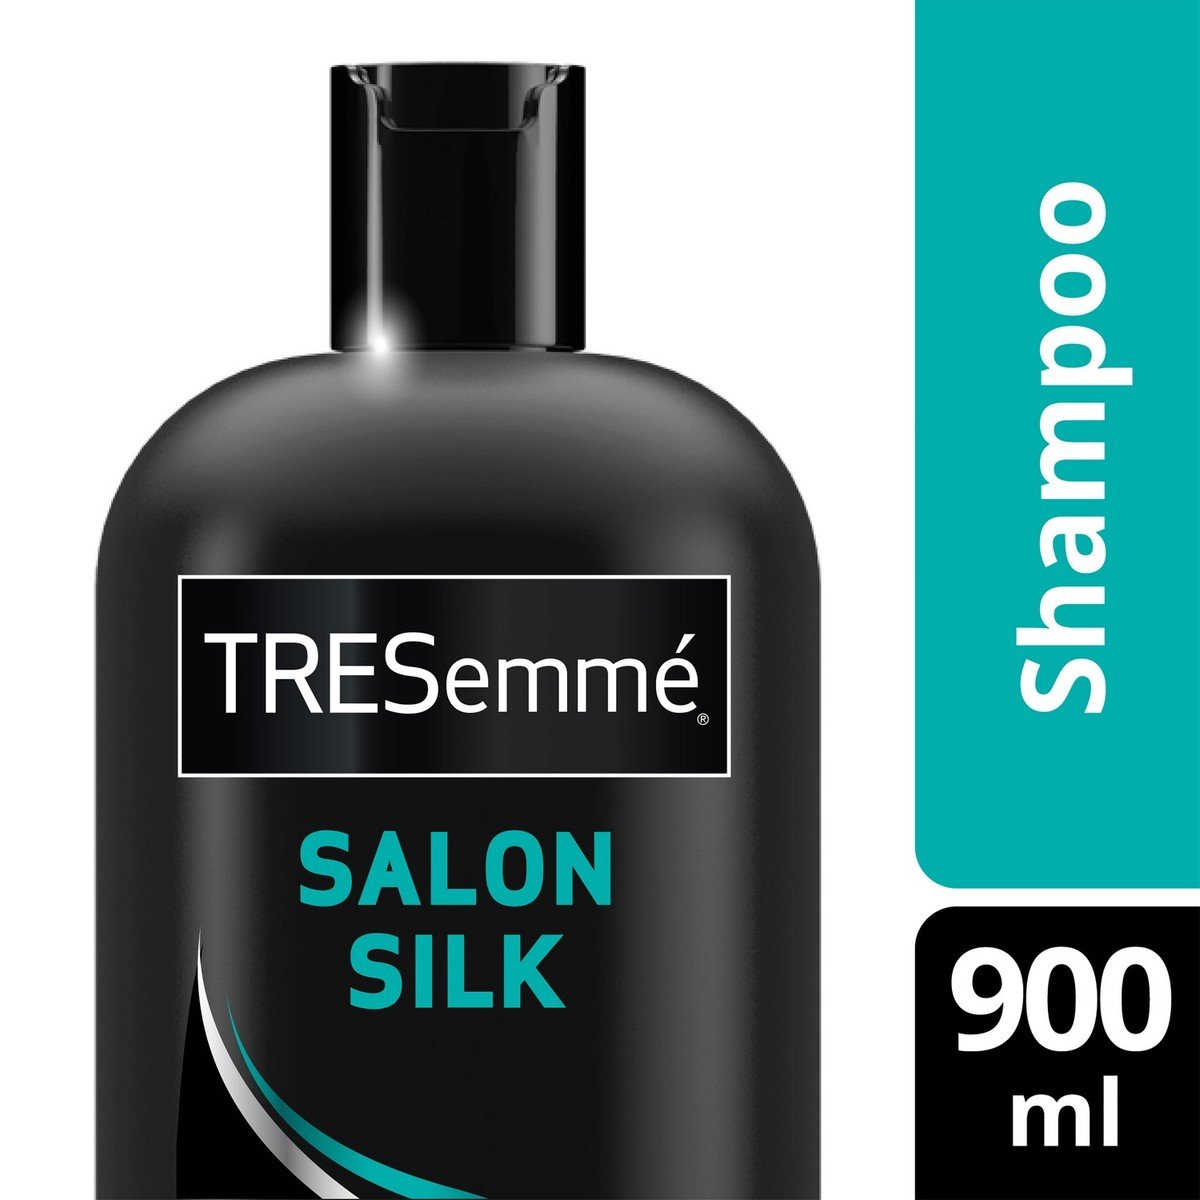 Tresemme Salon Silk Smoothening Shampoo 900 ml